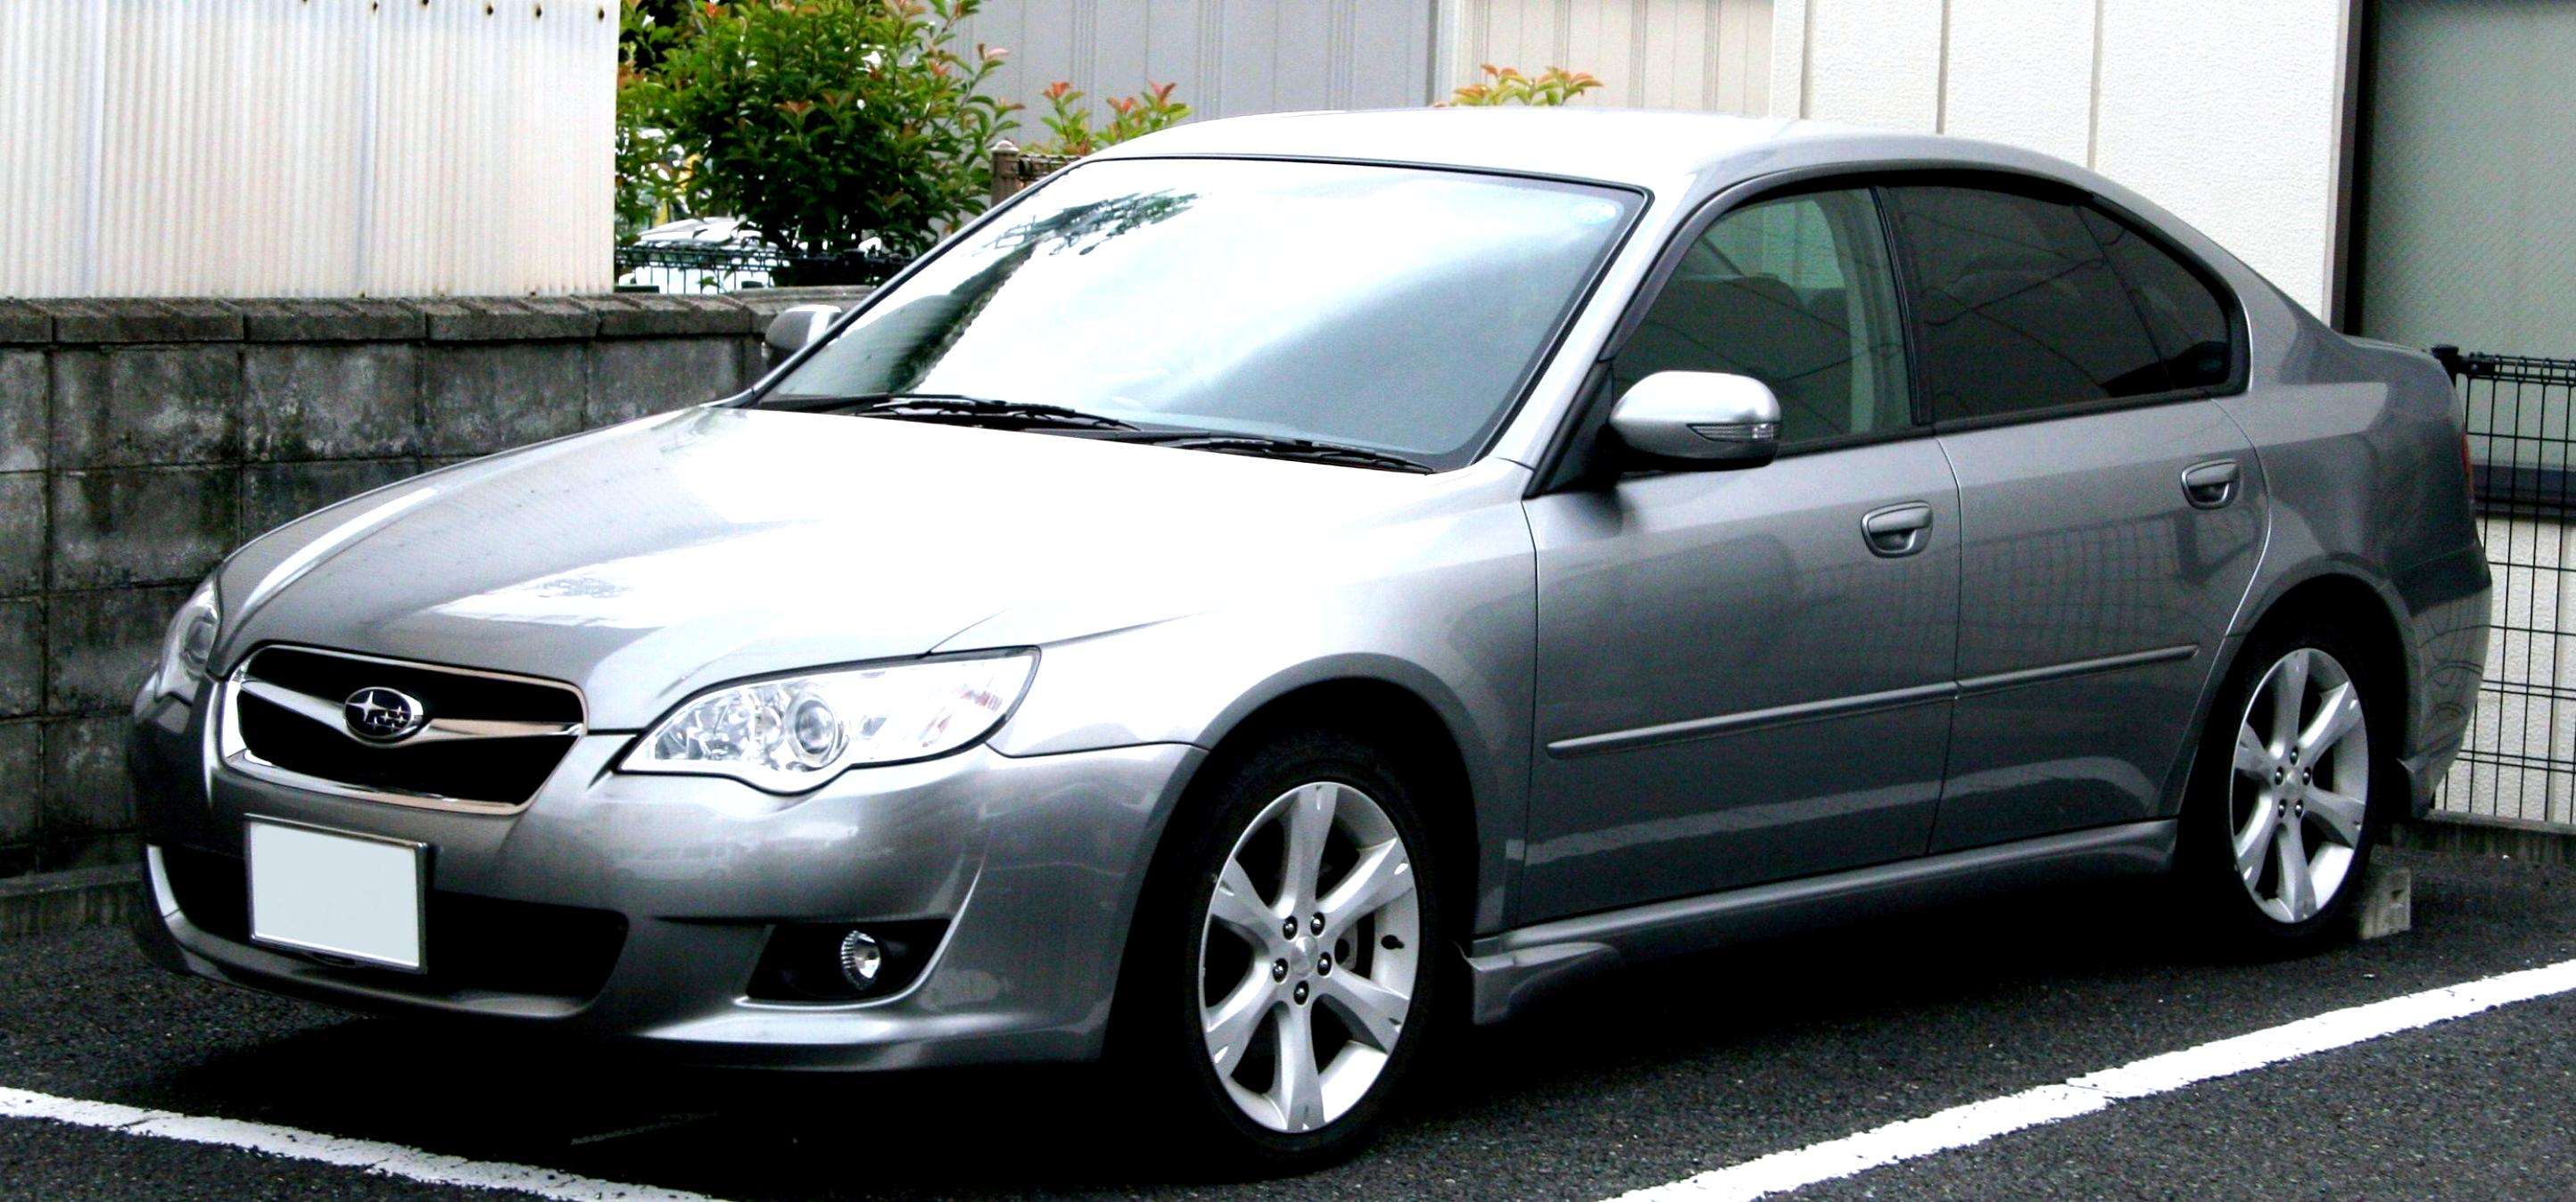 Subaru Legacy 2006 #2